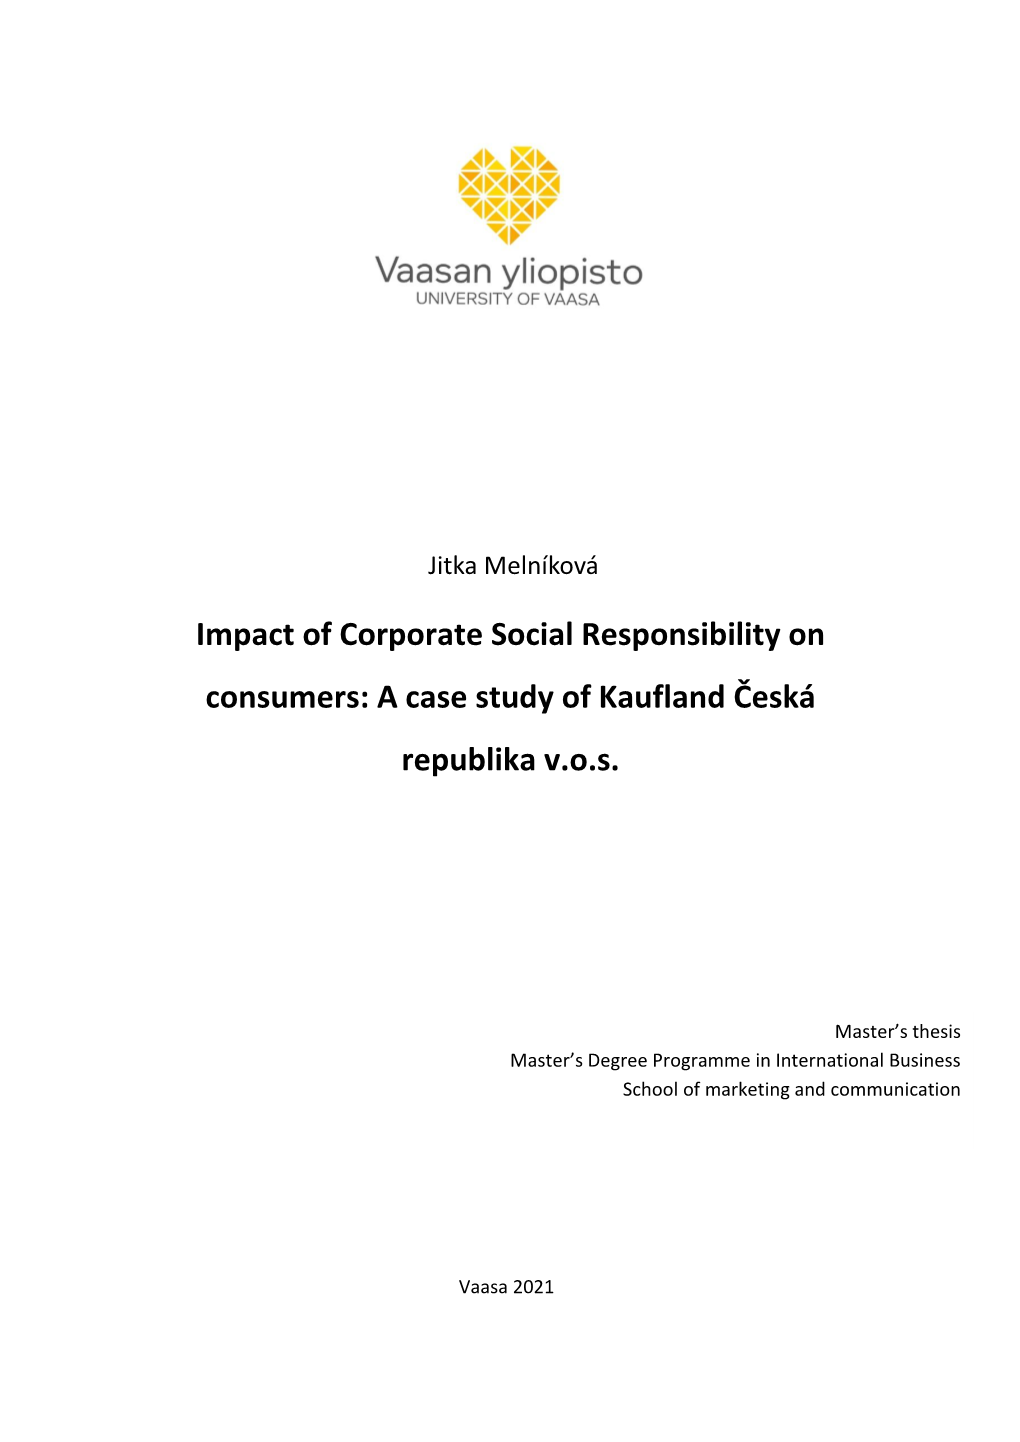 Impact of Corporate Social Responsibility on Consumers: a Case Study of Kaufland Česká Republika V.O.S